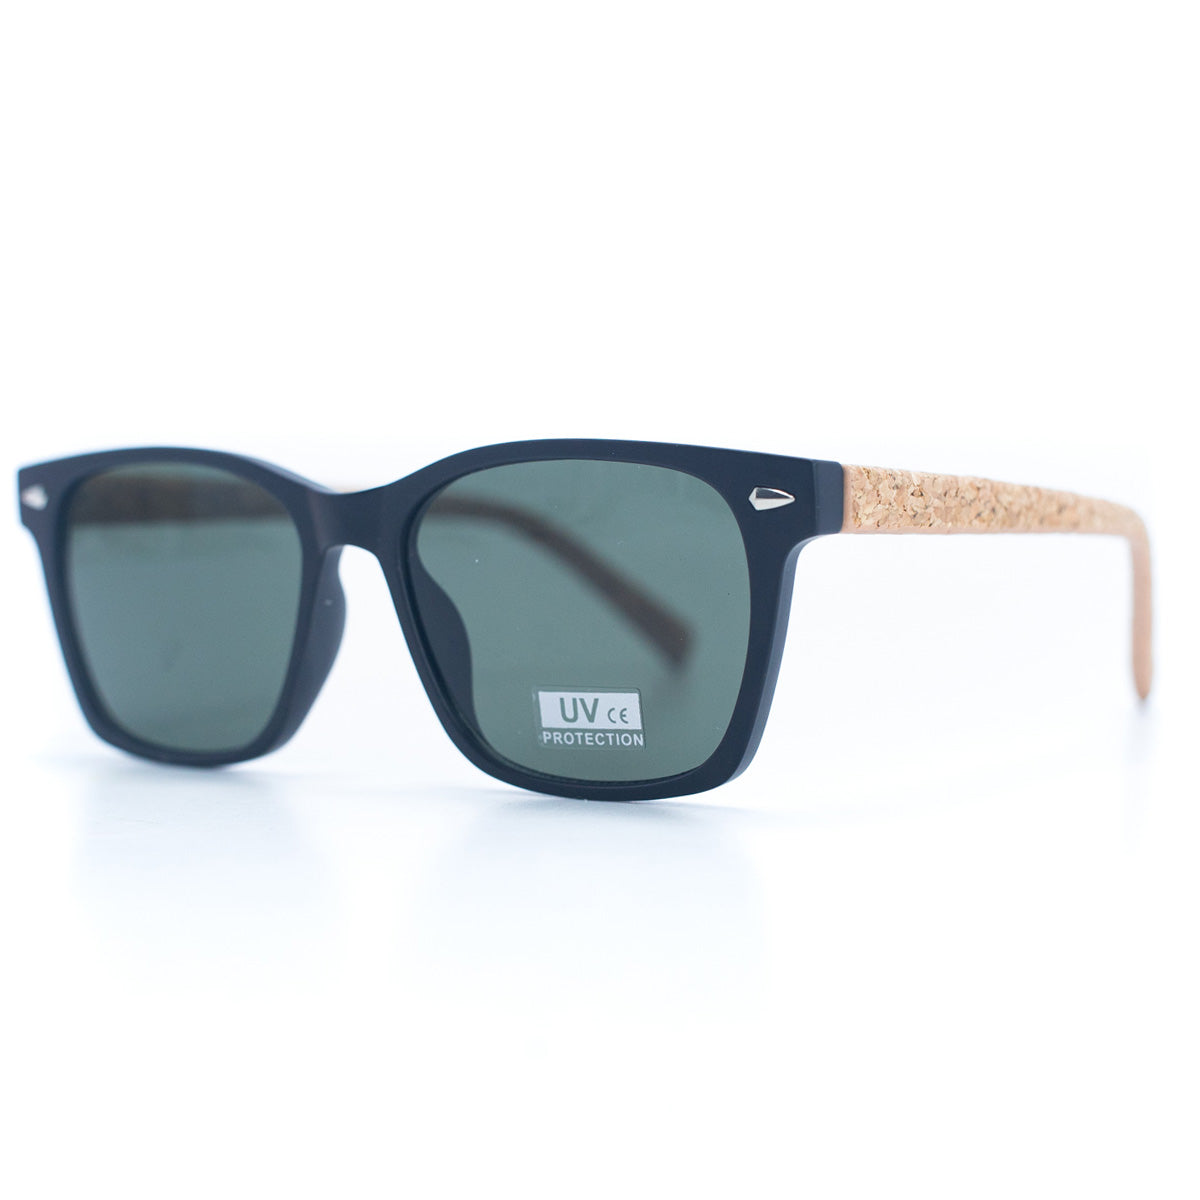 Men's Cork Sunglasses w/ UV Protection Lenses | THE CORK COLLECTION